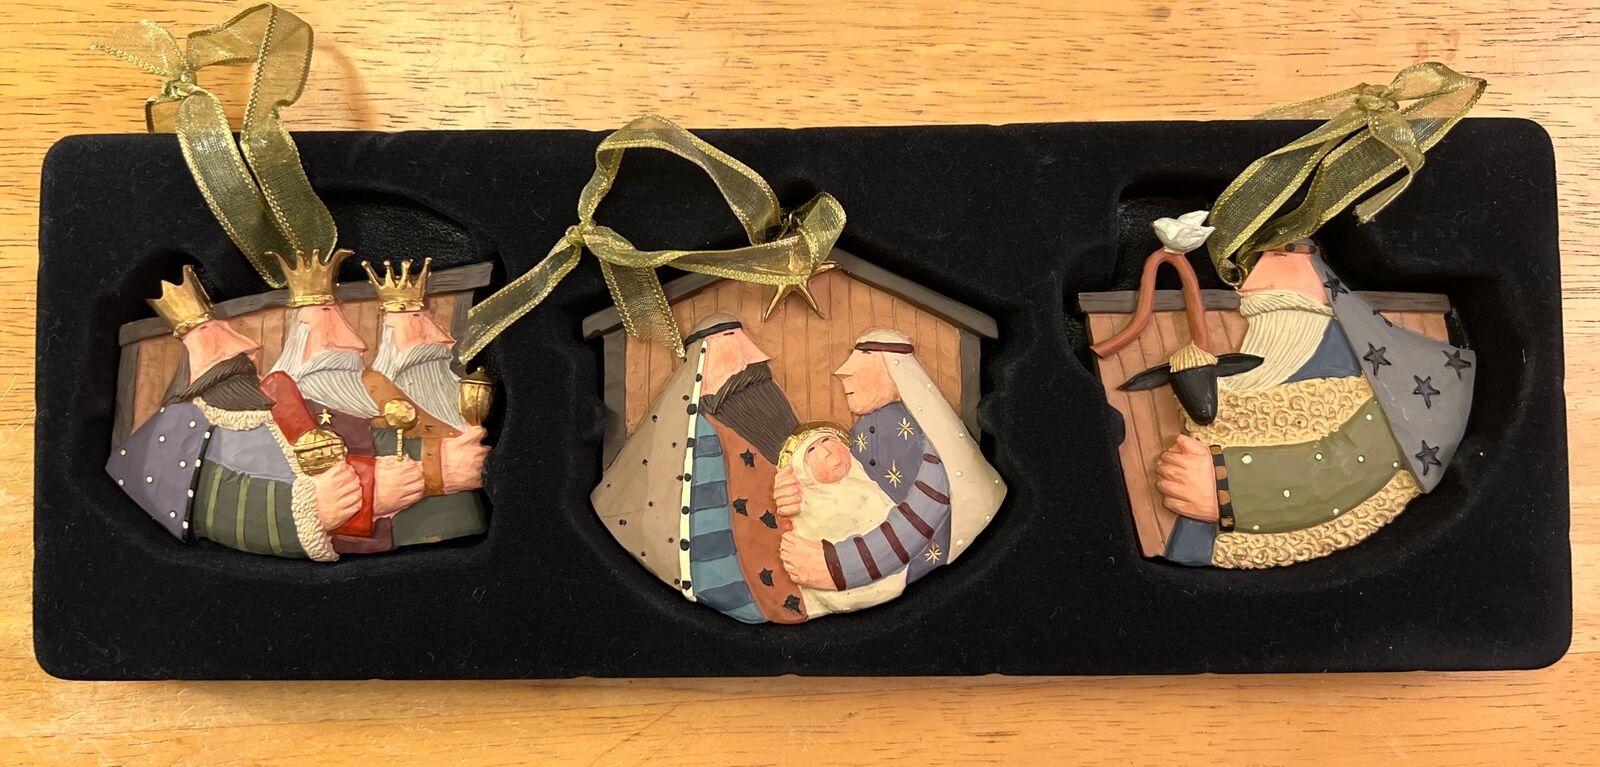 Williraye Studio Nativity Ornament Set , RETIRED, New In Box